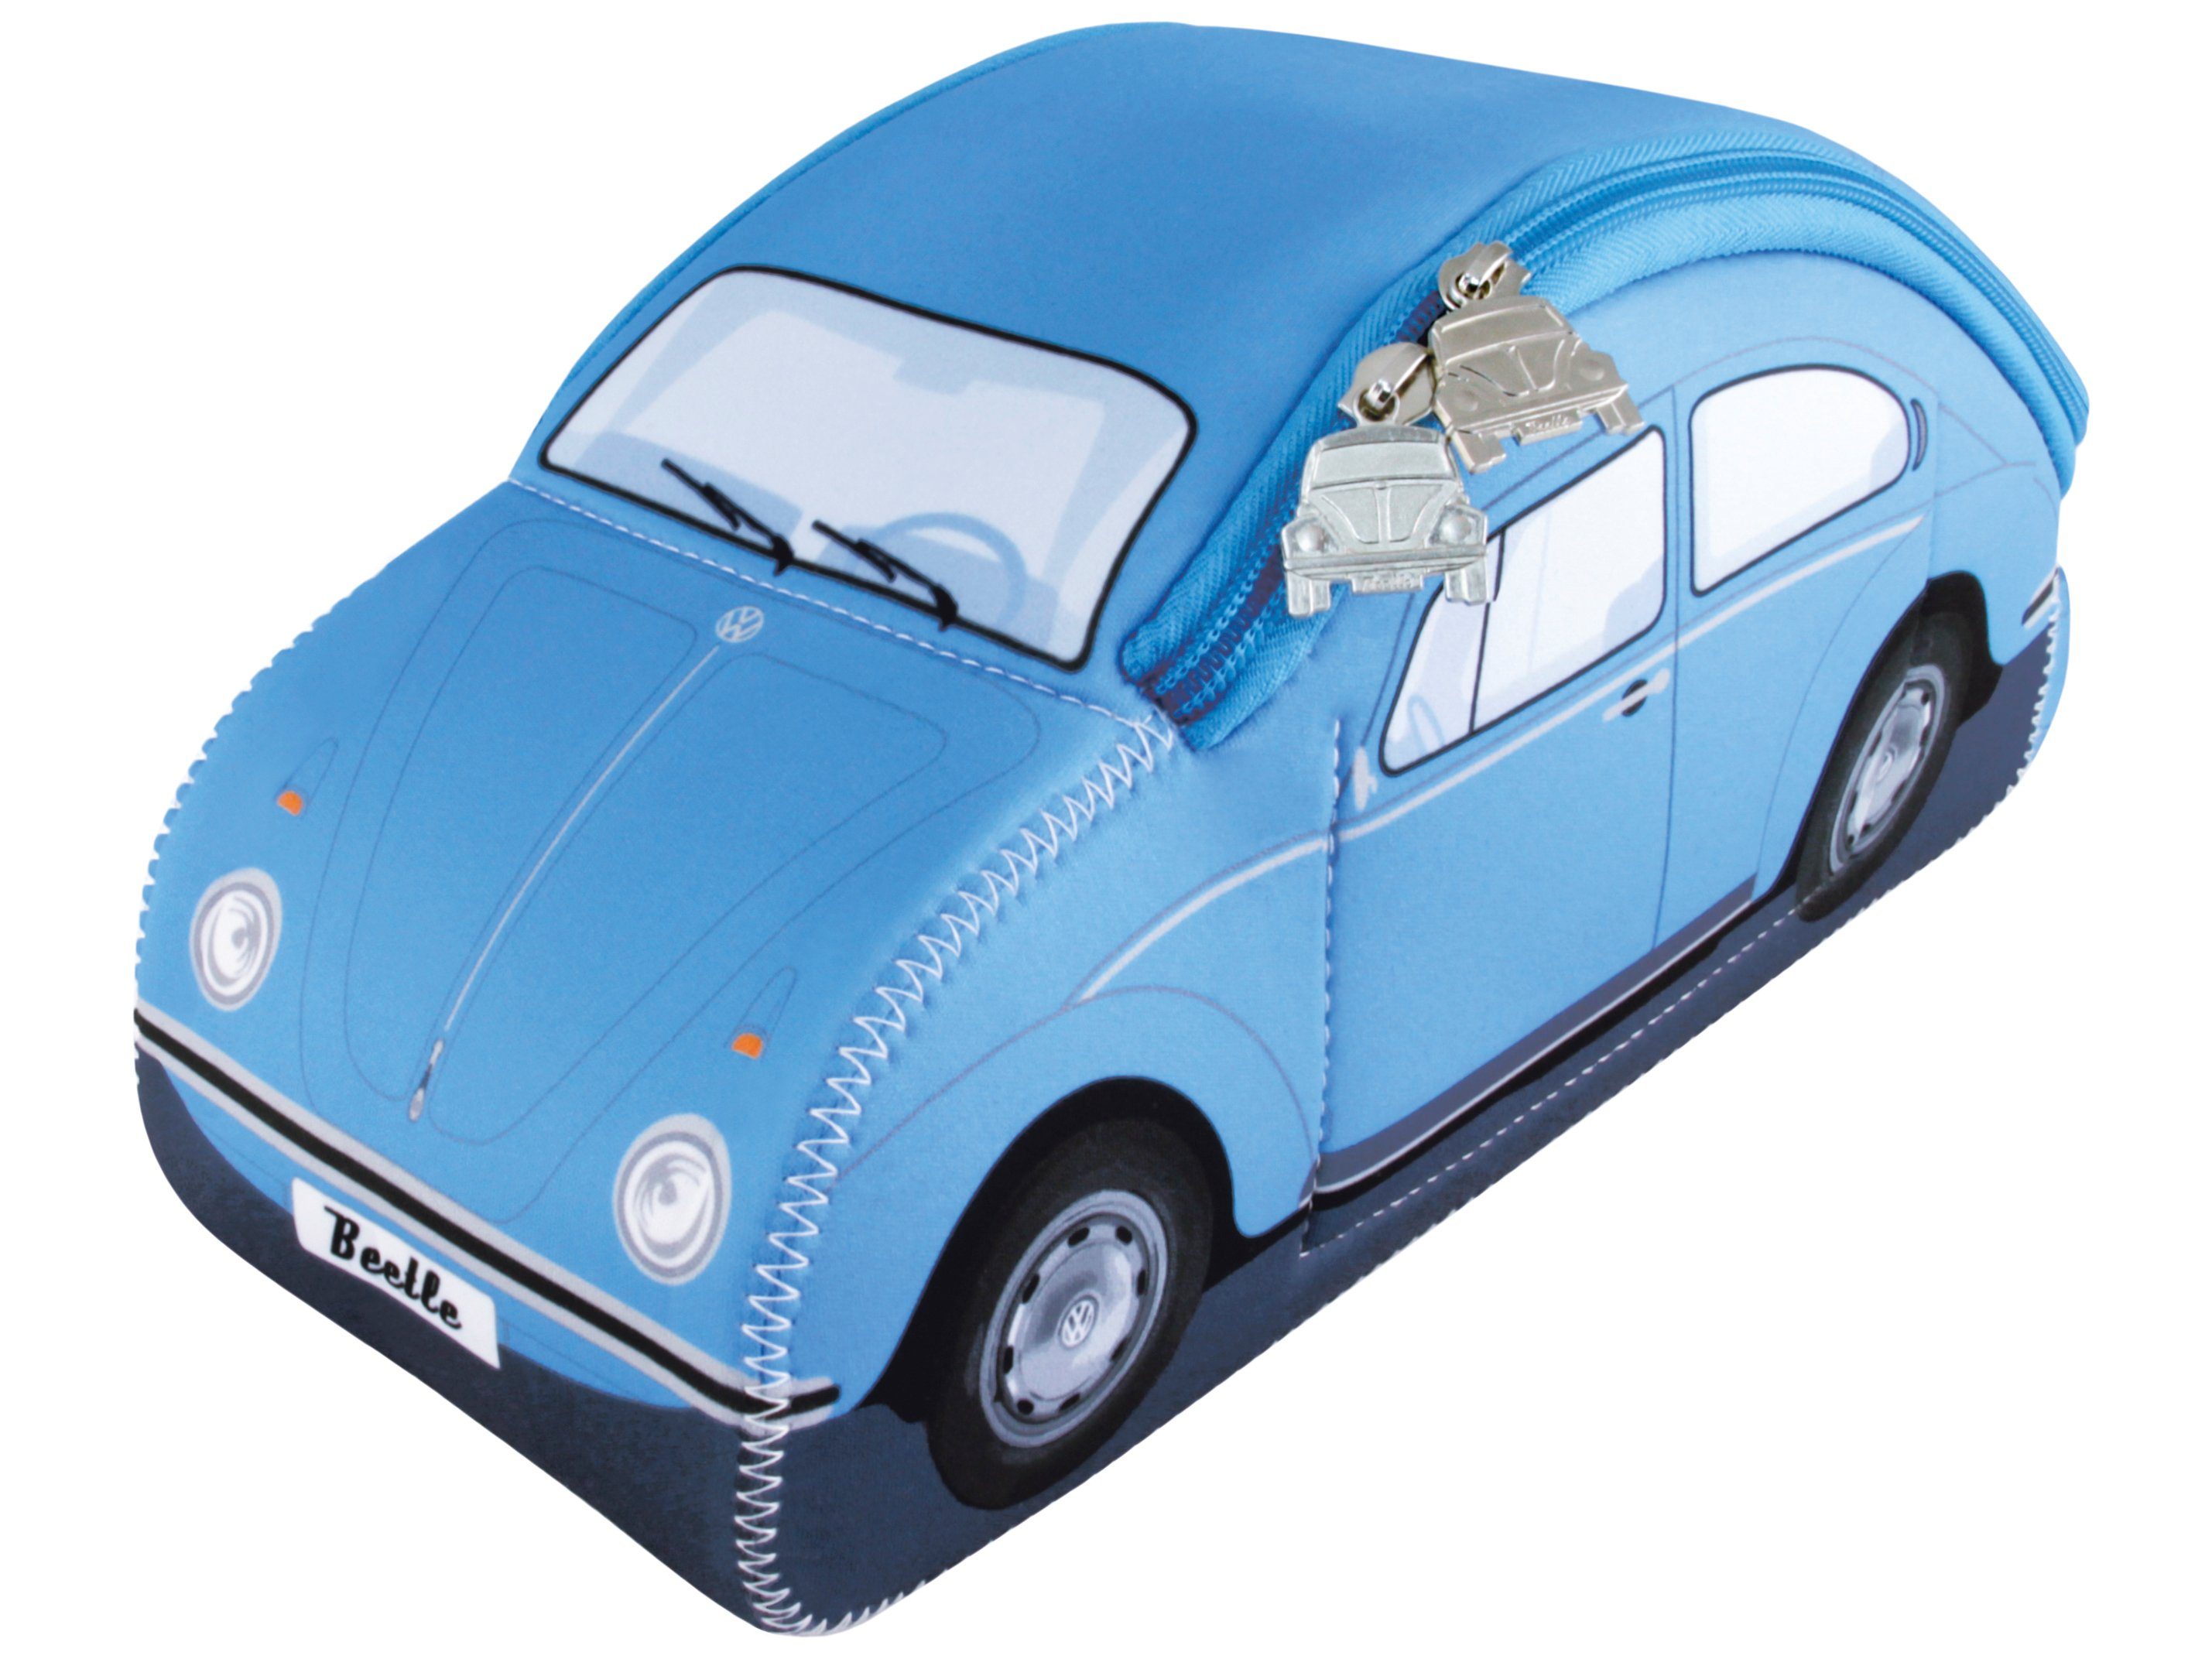 VW Collection by BRISA Kulturbeutel Volkswagen Neopren Kosmetikbeutel im  Käfer/Beetle Design, hellblaue Universaltasche